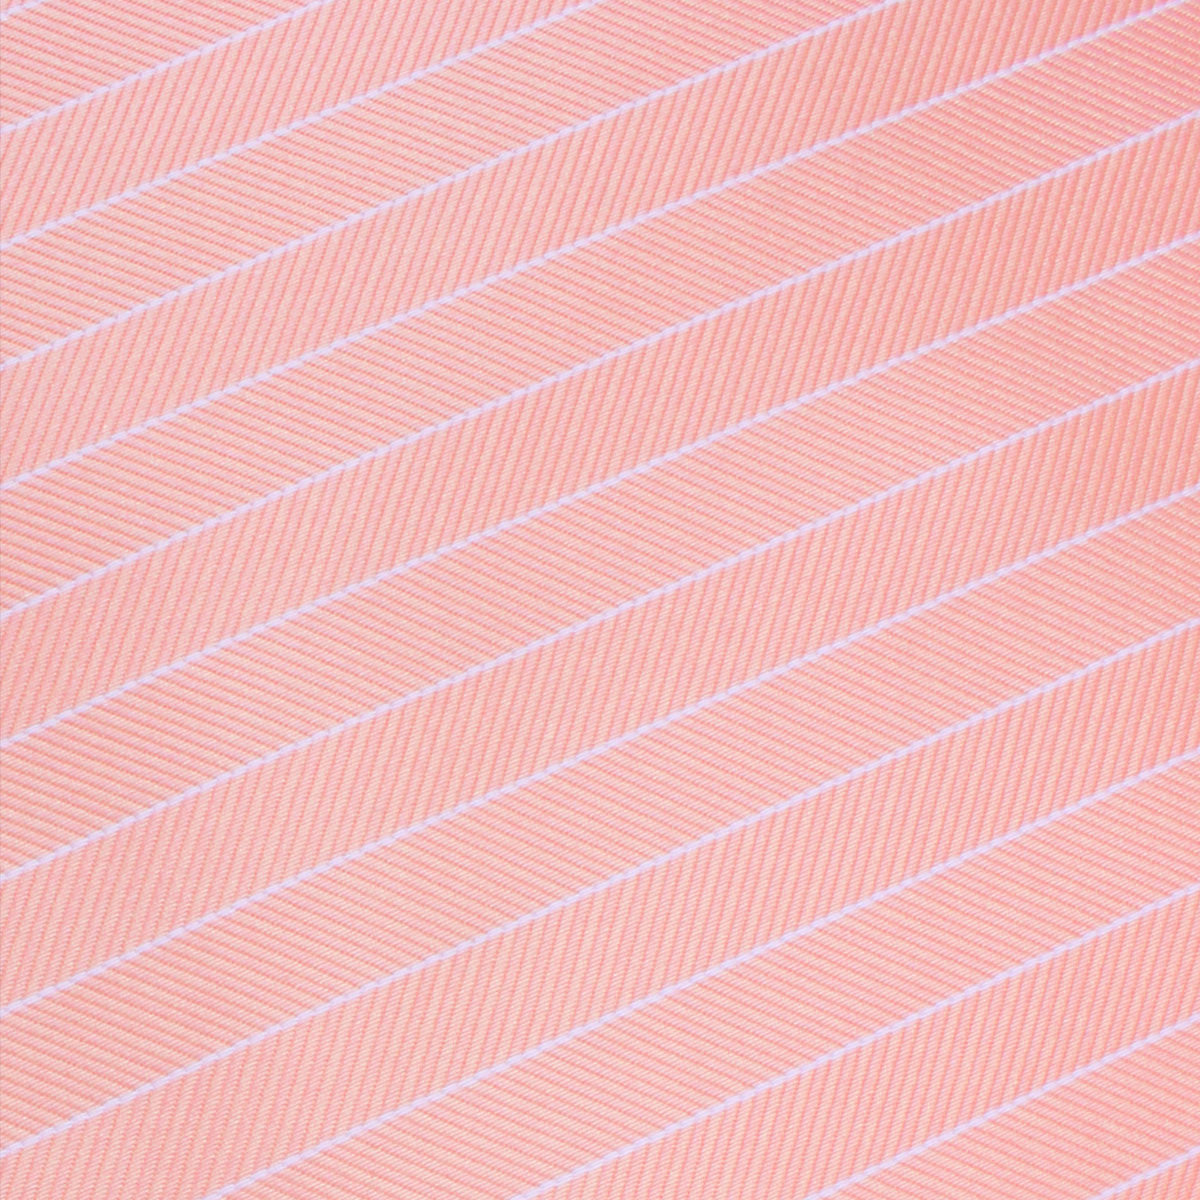 Blush Pink Herringbone Pinstripe Pocket Square Fabric